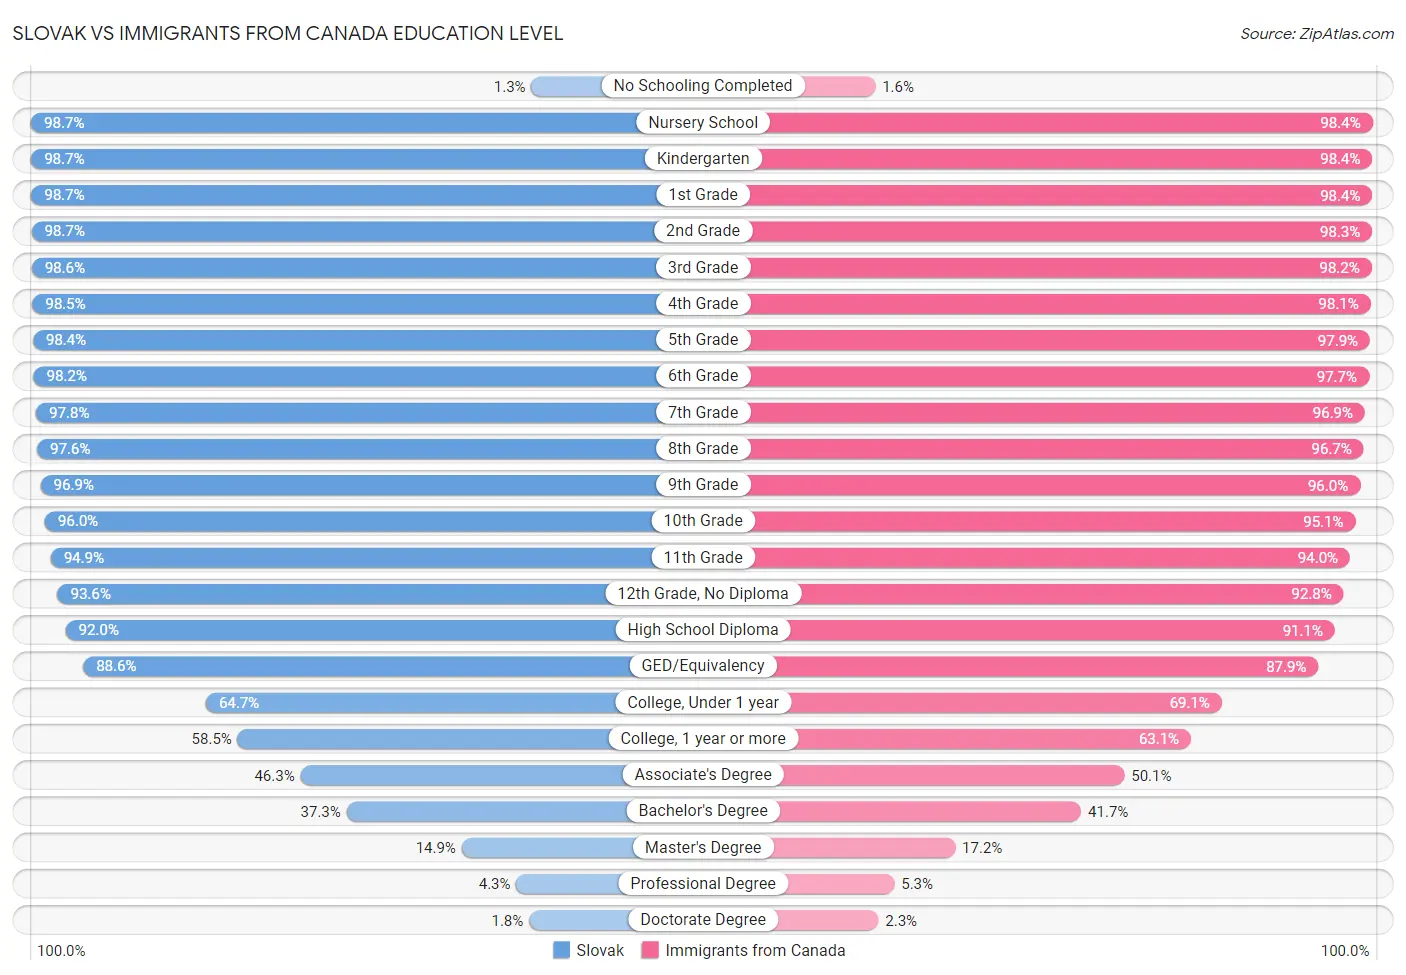 Slovak vs Immigrants from Canada Education Level